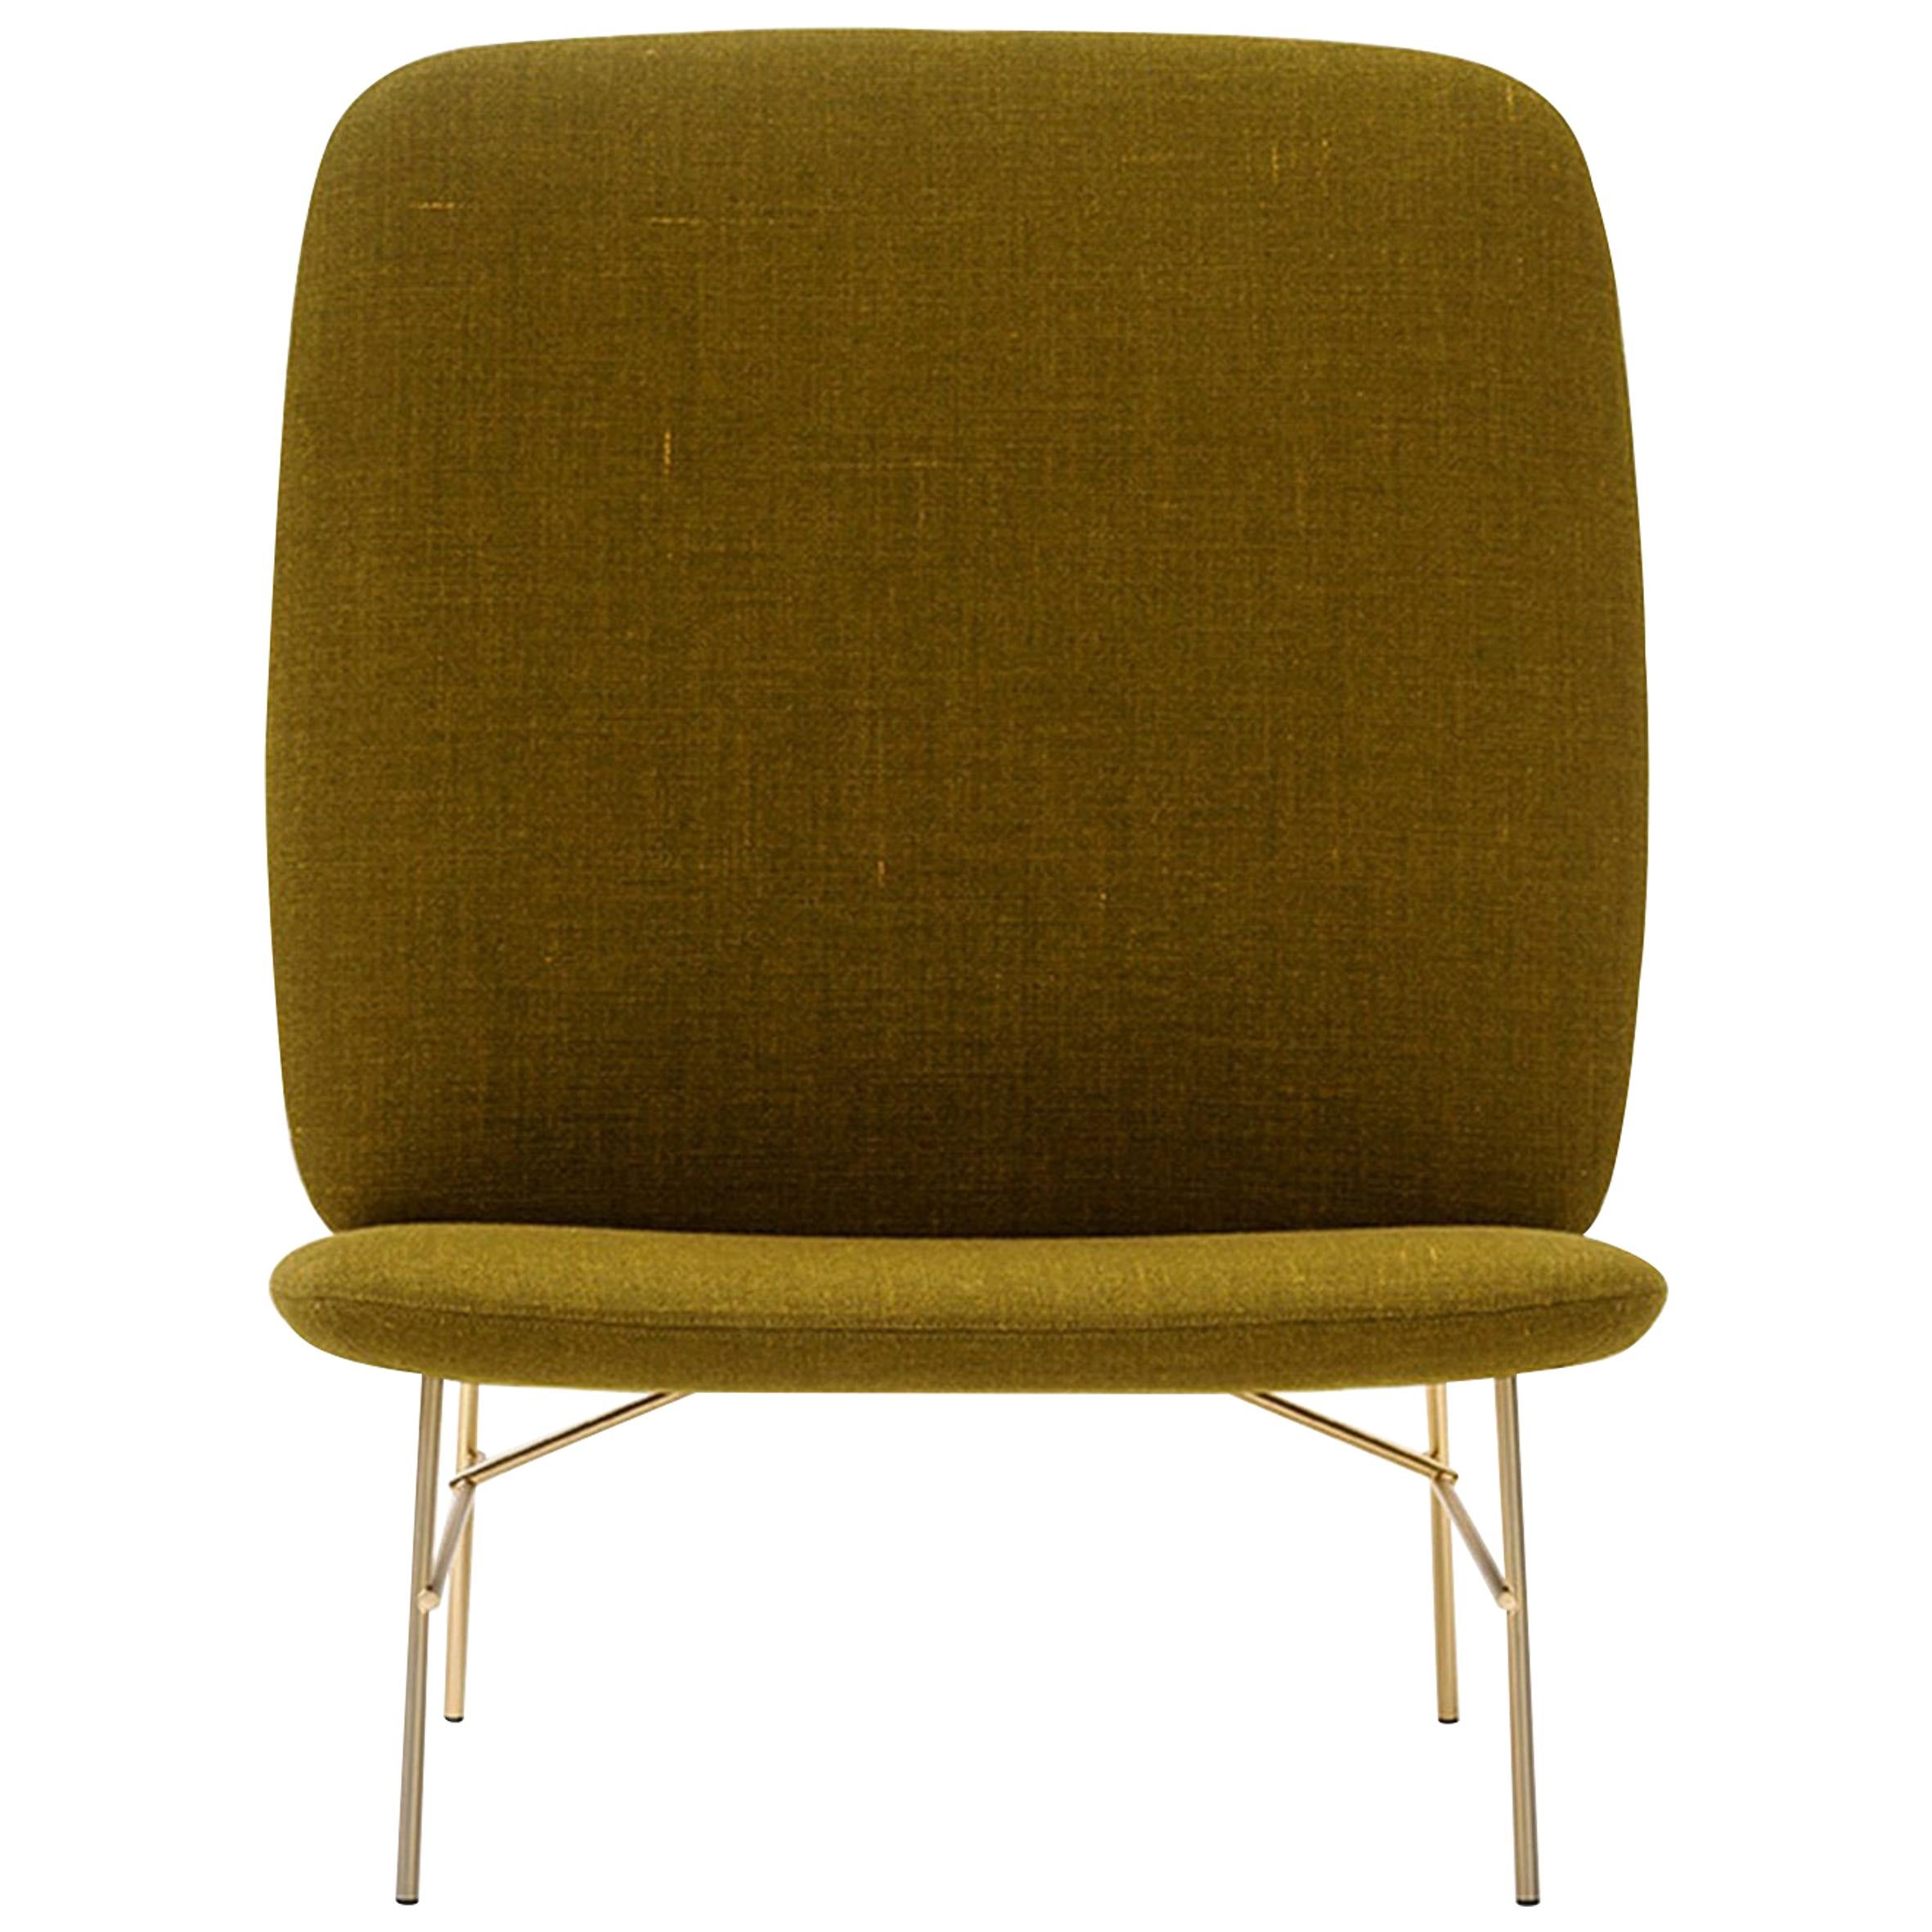 Customizable Tacchini Kelly H-Chair Designed by Claesson Koivisto Rune